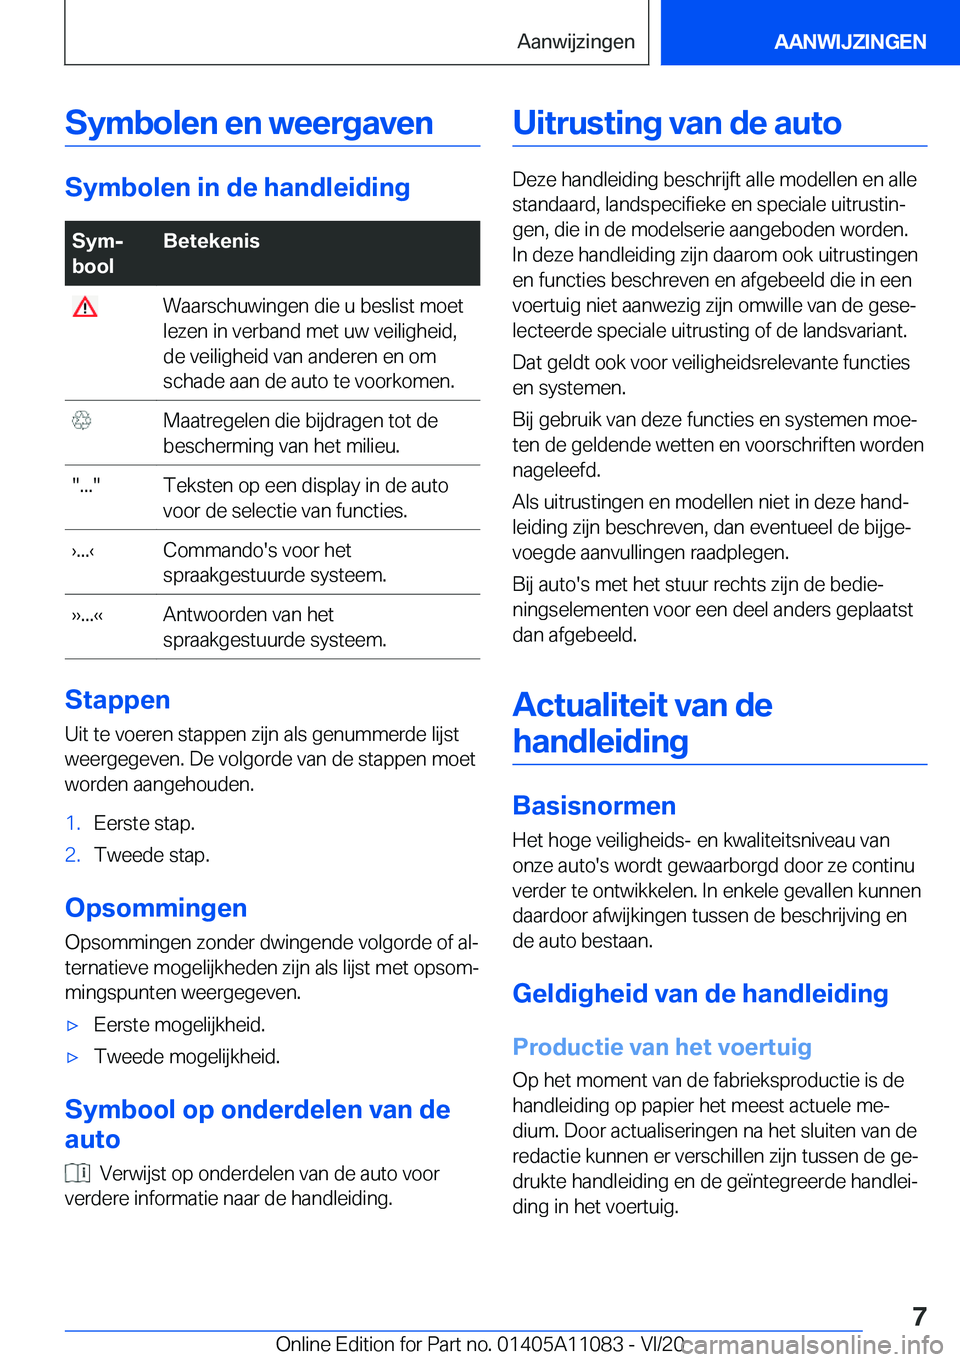 BMW 7 SERIES 2021  Instructieboekjes (in Dutch) �S�y�m�b�o�l�e�n��e�n��w�e�e�r�g�a�v�e�n
�S�y�m�b�o�l�e�n��i�n��d�e��h�a�n�d�l�e�i�d�i�n�g
�S�y�mj
�b�o�o�l�B�e�t�e�k�e�n�i�s��W�a�a�r�s�c�h�u�w�i�n�g�e�n��d�i�e��u��b�e�s�l�i�s�t��m�o�e�t
